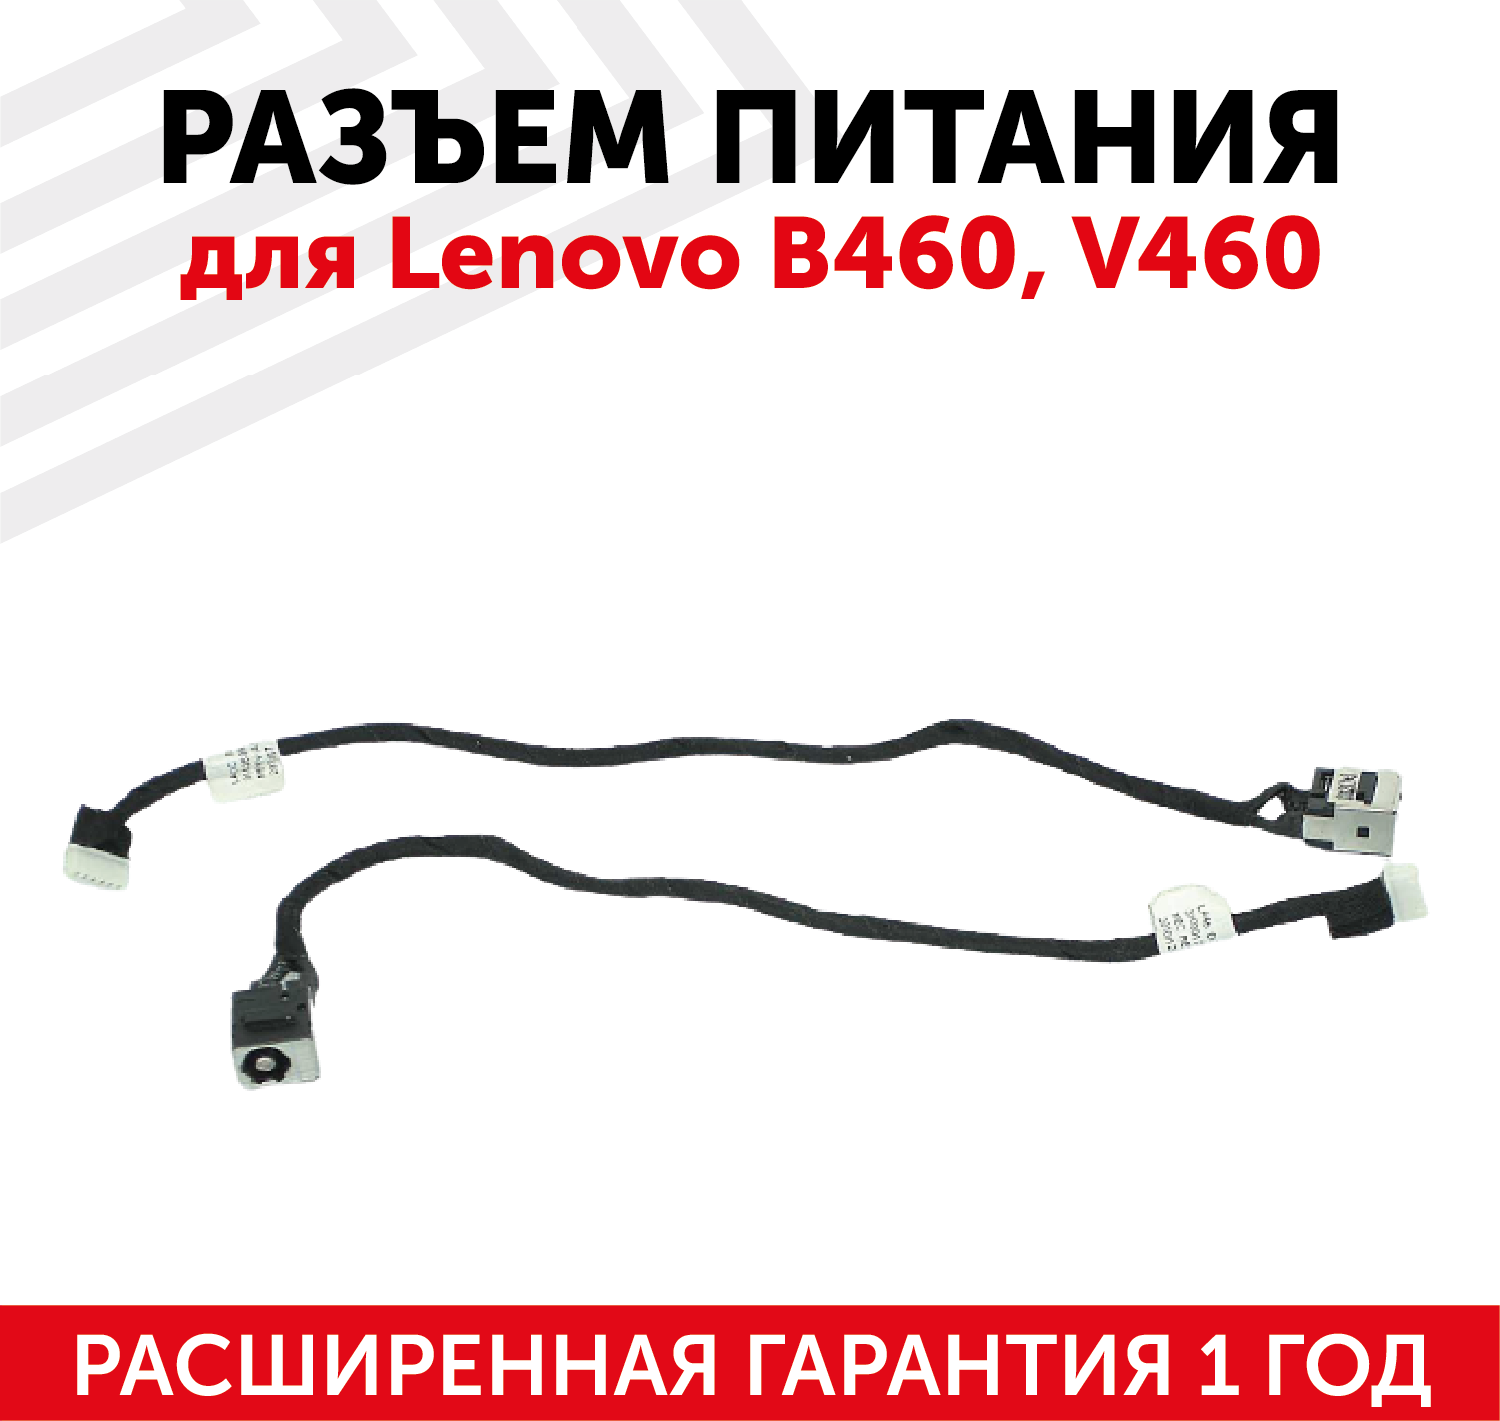 Разъем для ноутбука HY-LE026 Lenovo B460 V460 с кабелем